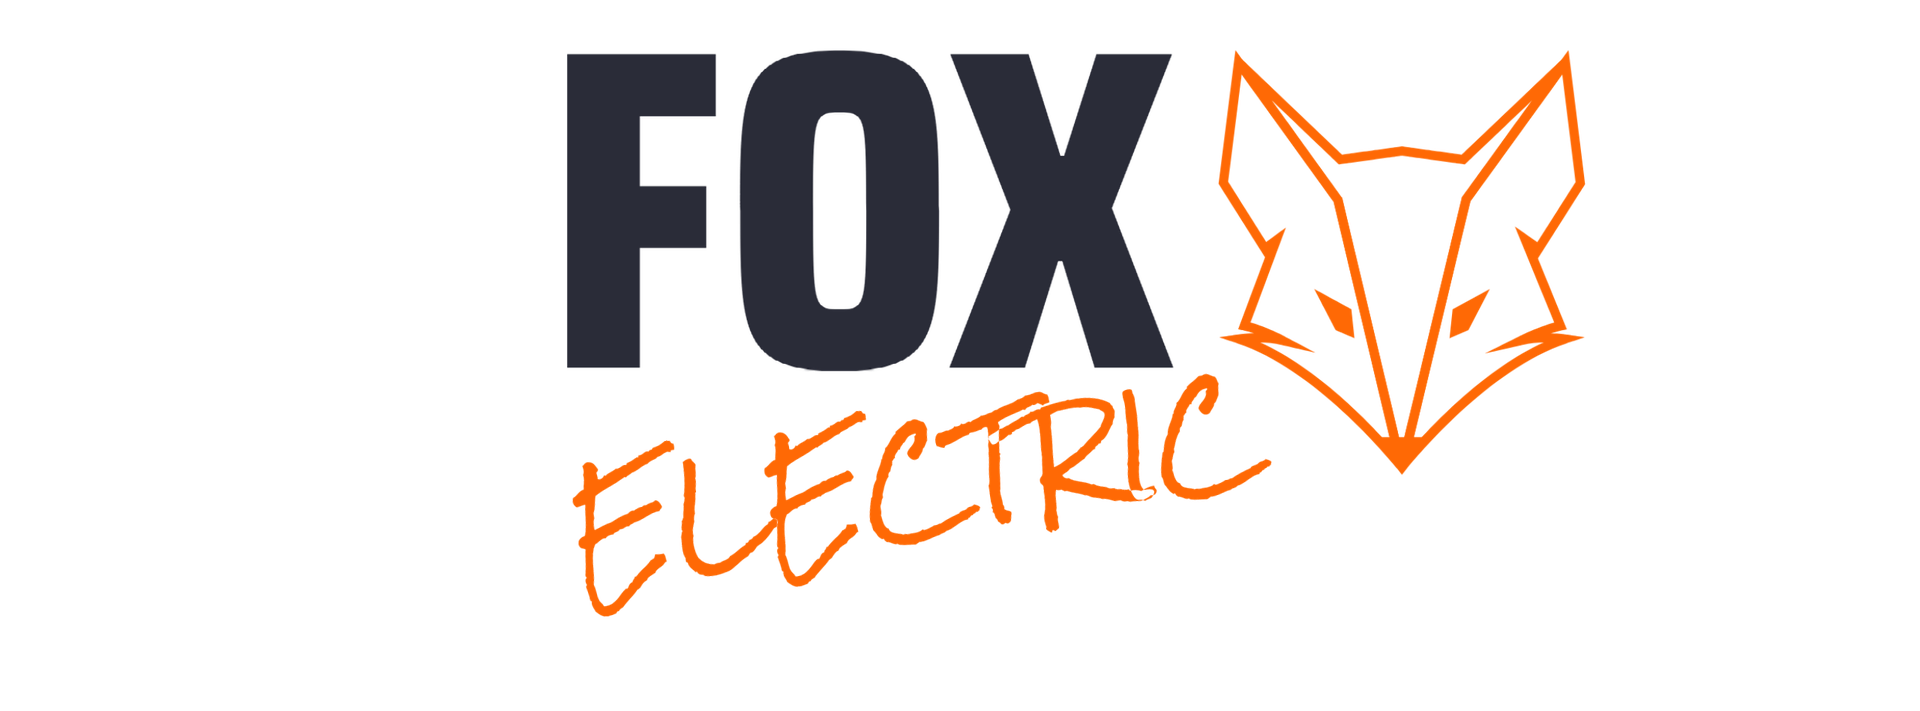 FOX Electric Kft.